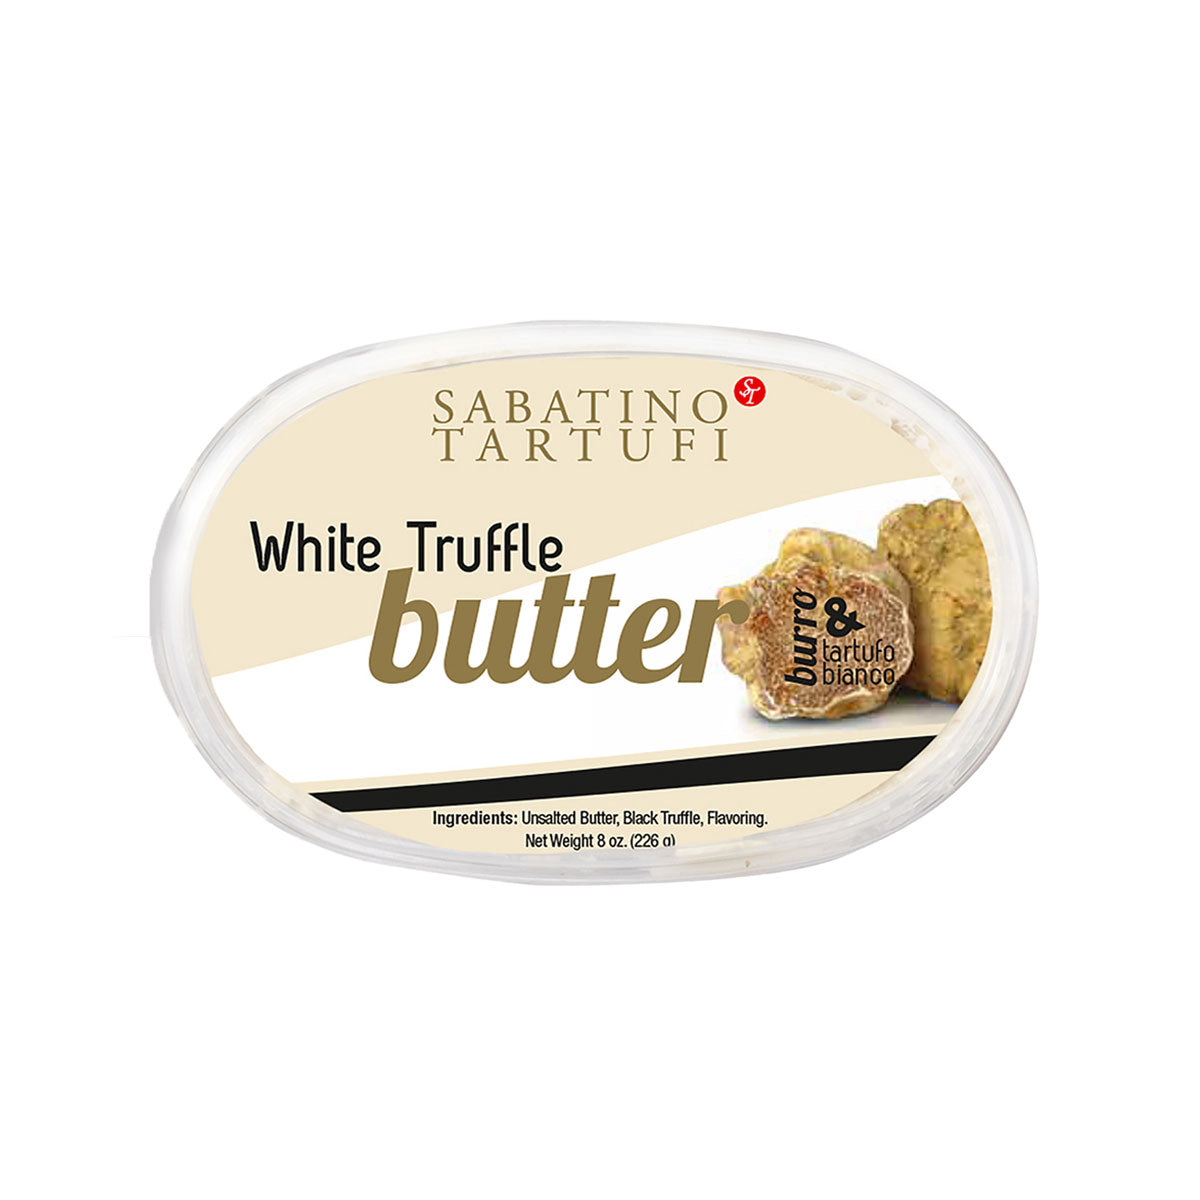 Sabatino Tartufi White Truffle Butter